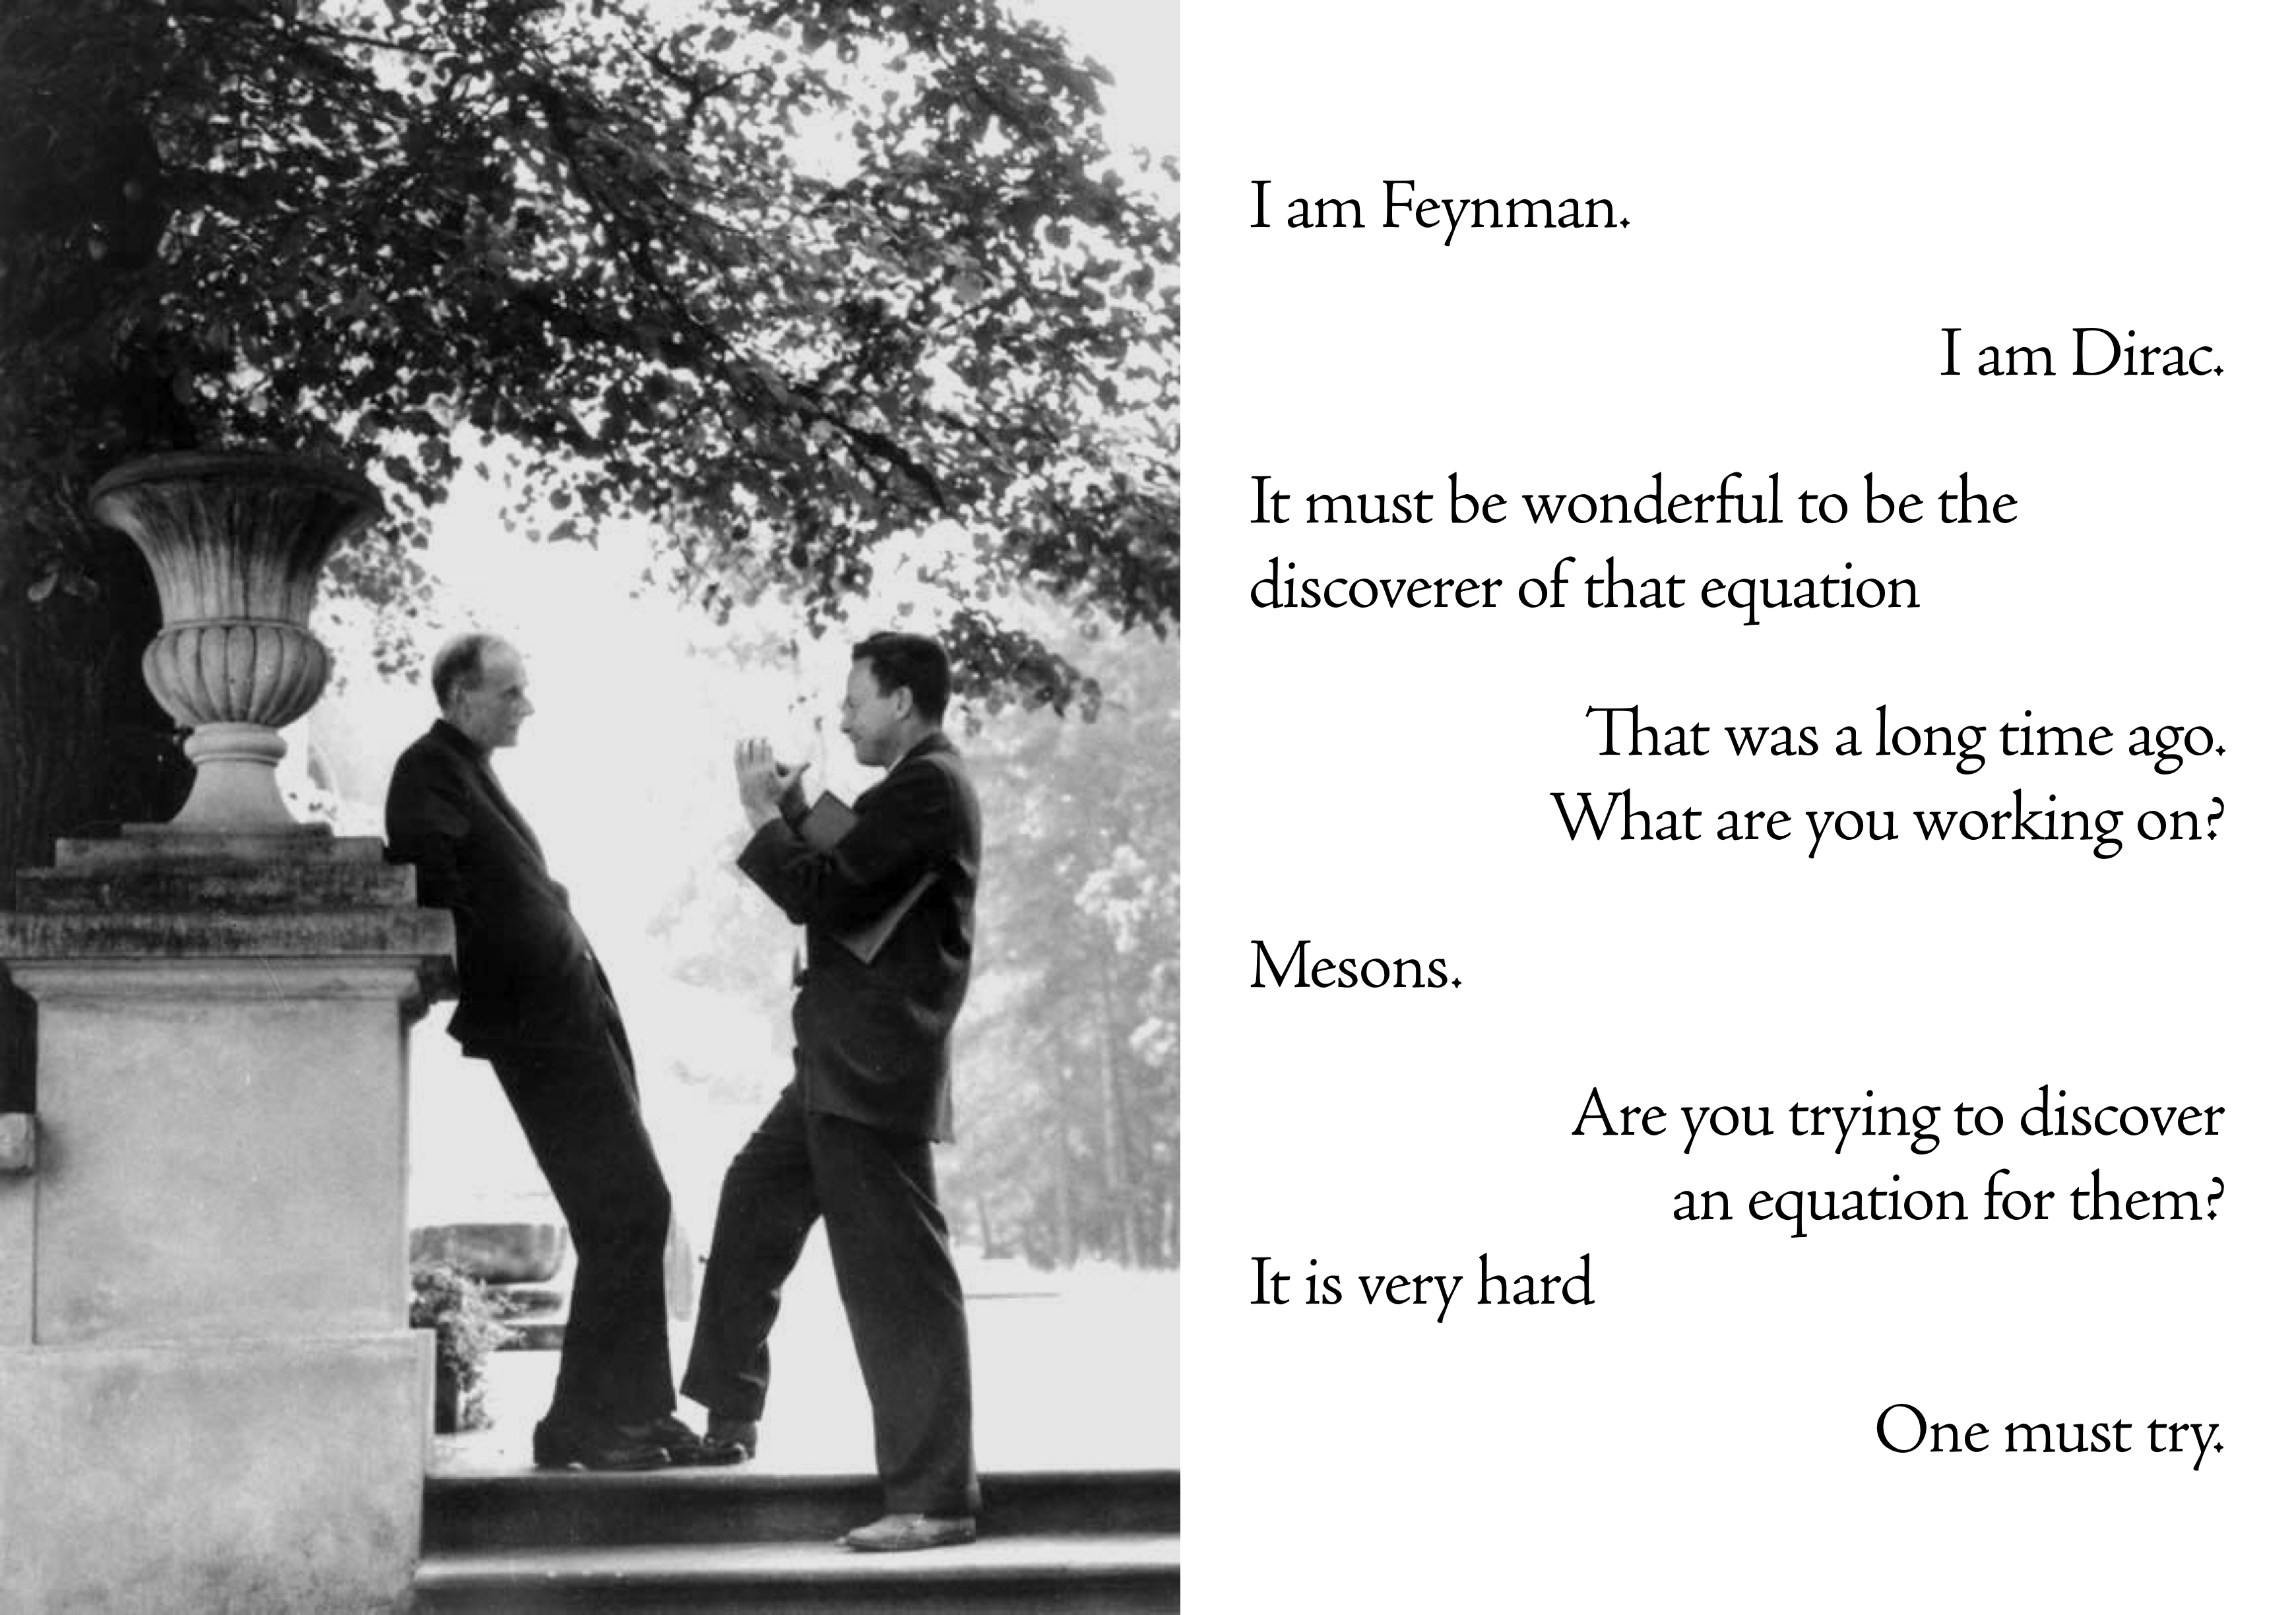 When Feynman met Dirac. “I am Feynman. I am Dirac. (Silence)” | by Jørgen  Veisdal | Cantor's Paradise | Medium